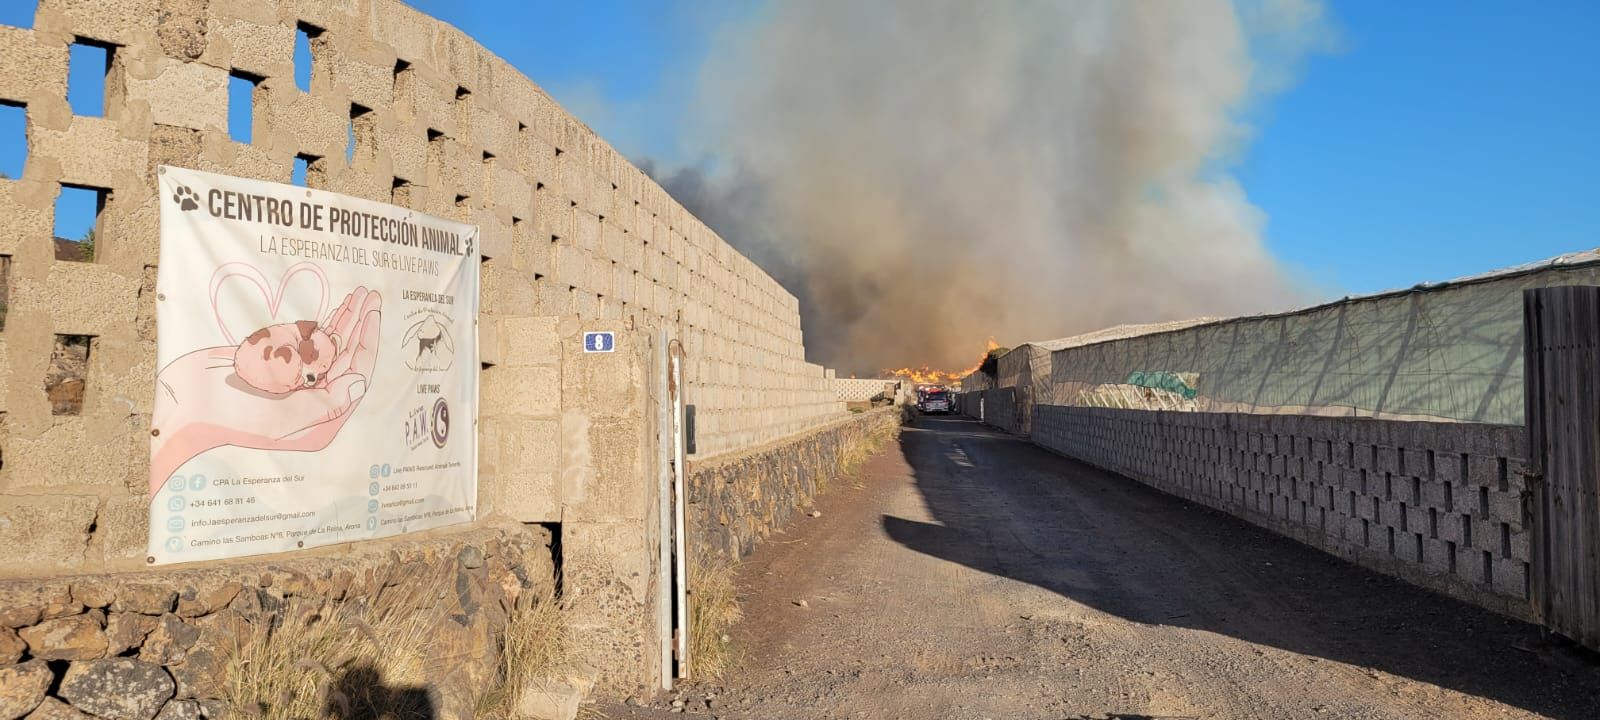 Incendio planta compostaje en Arona